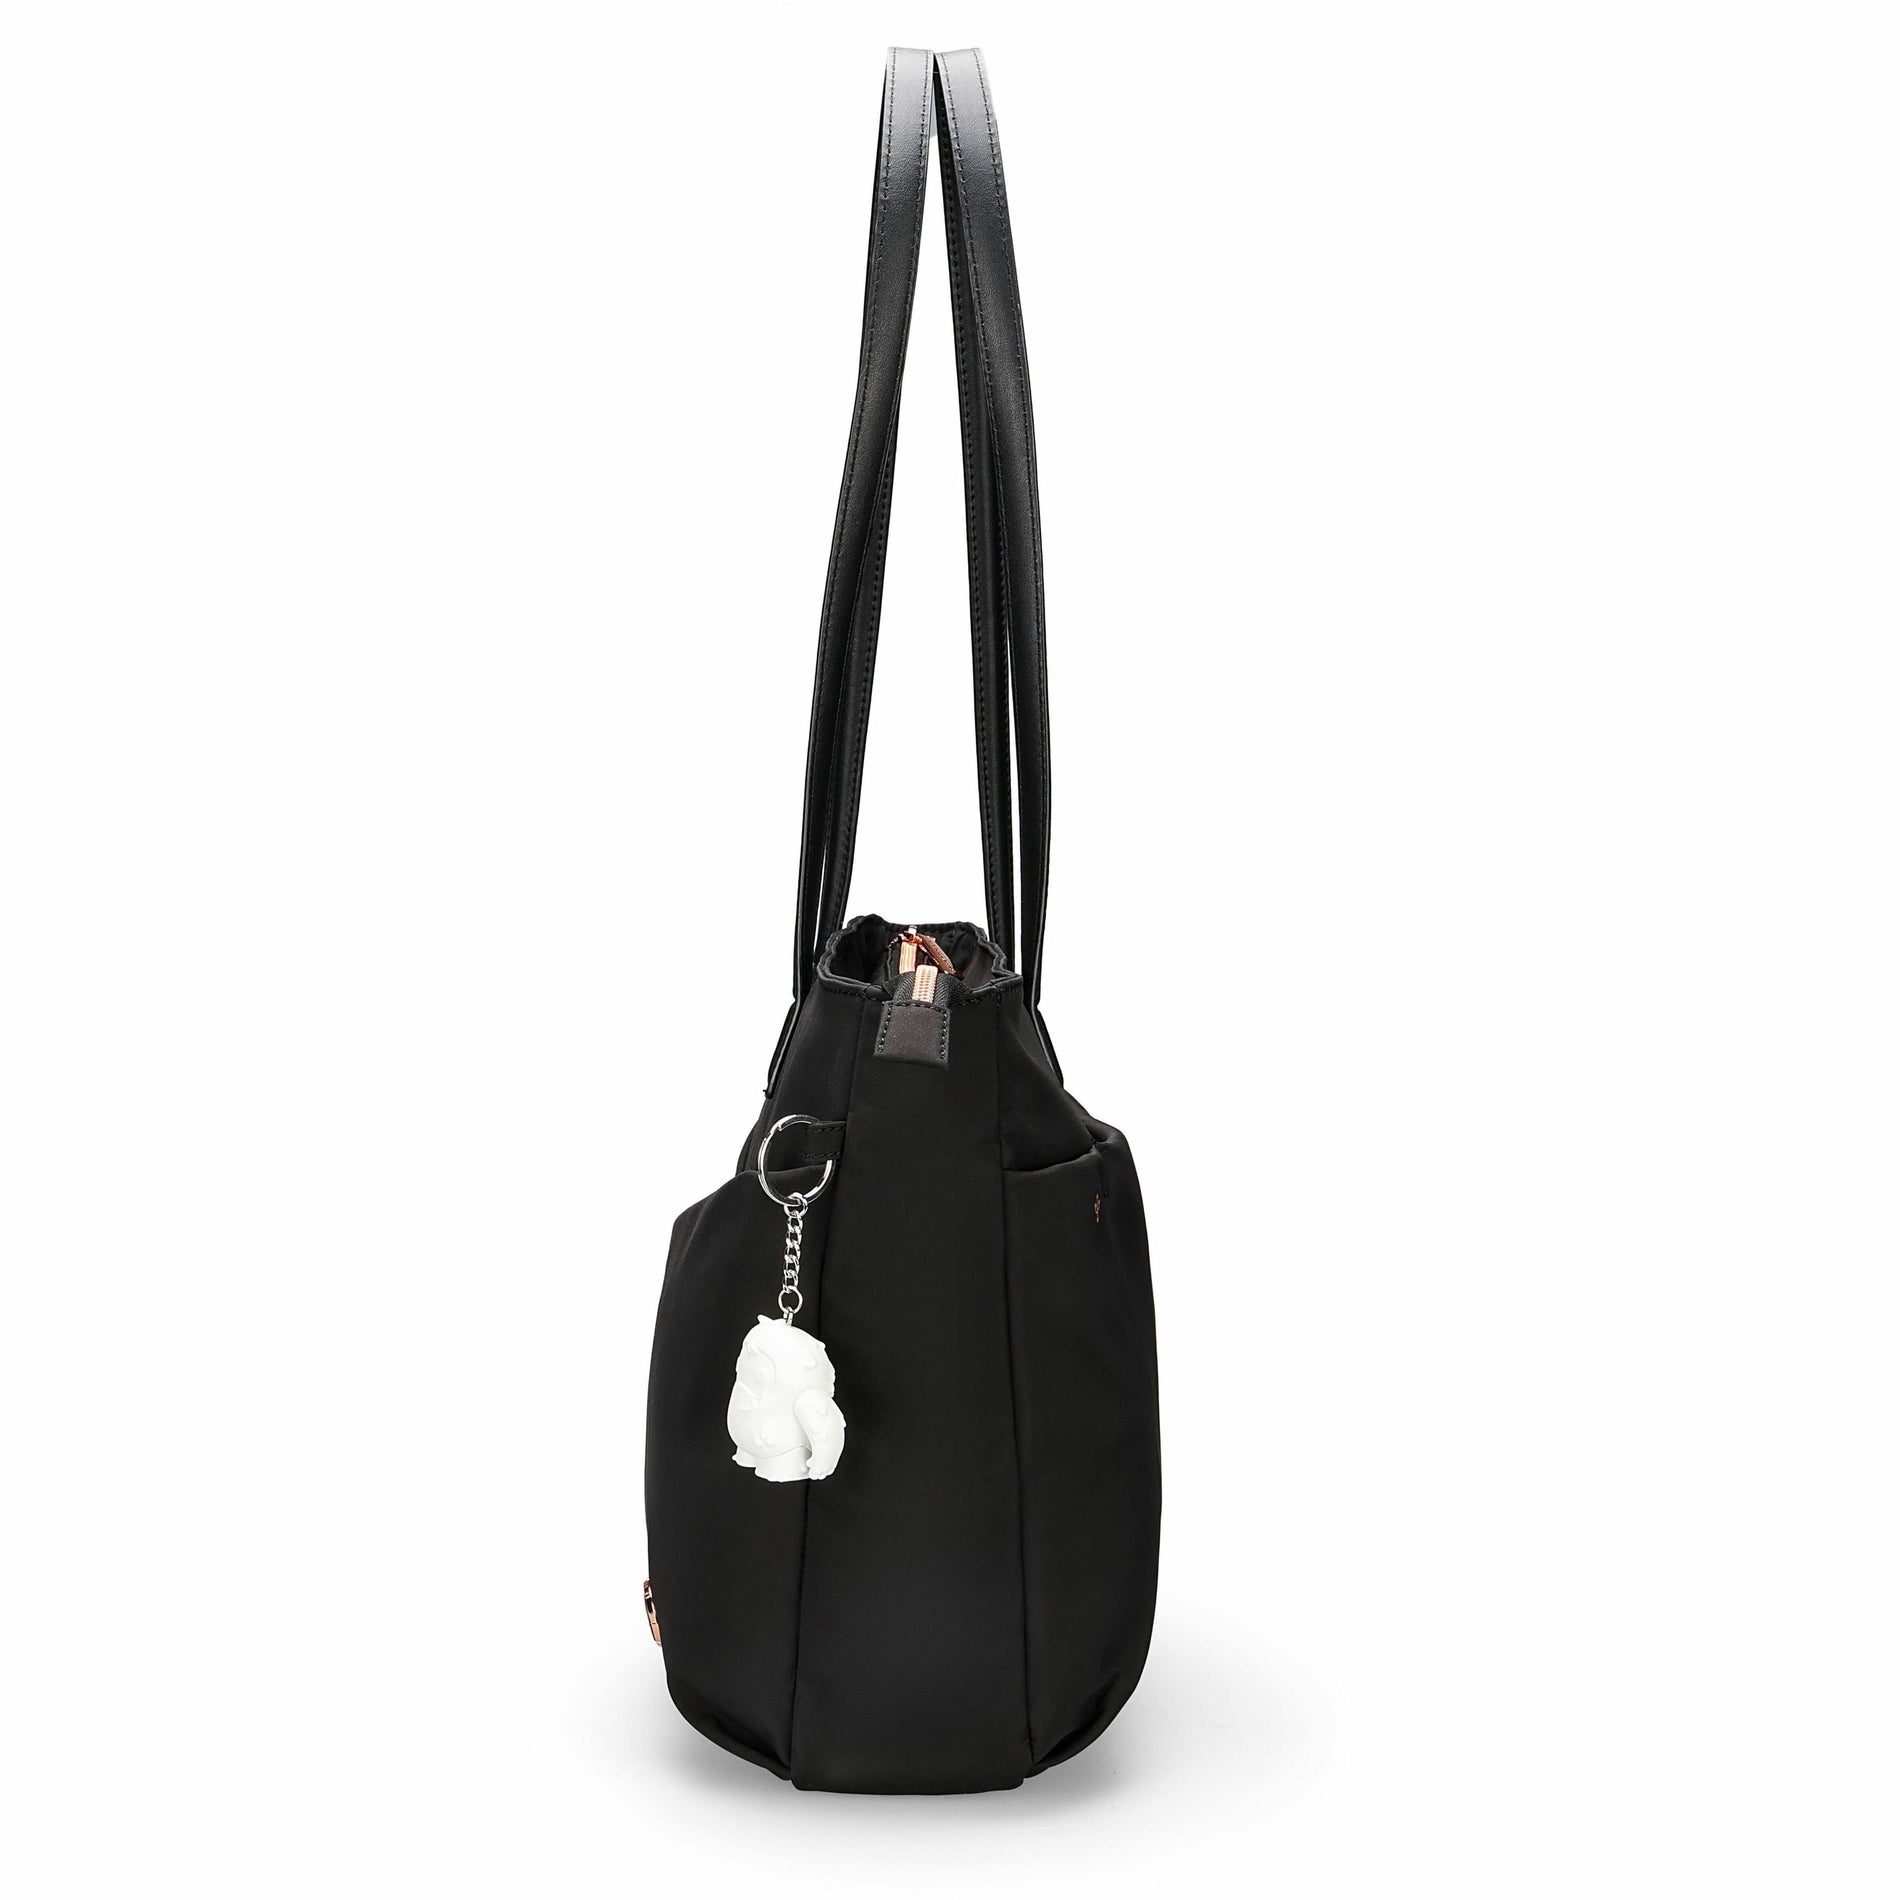 Swissdigital Design SD7517-01 KATY ROSE NG Black Tote Bag | LED, Eco-friendly, USB Charging Port, RFID Blocking Pocket